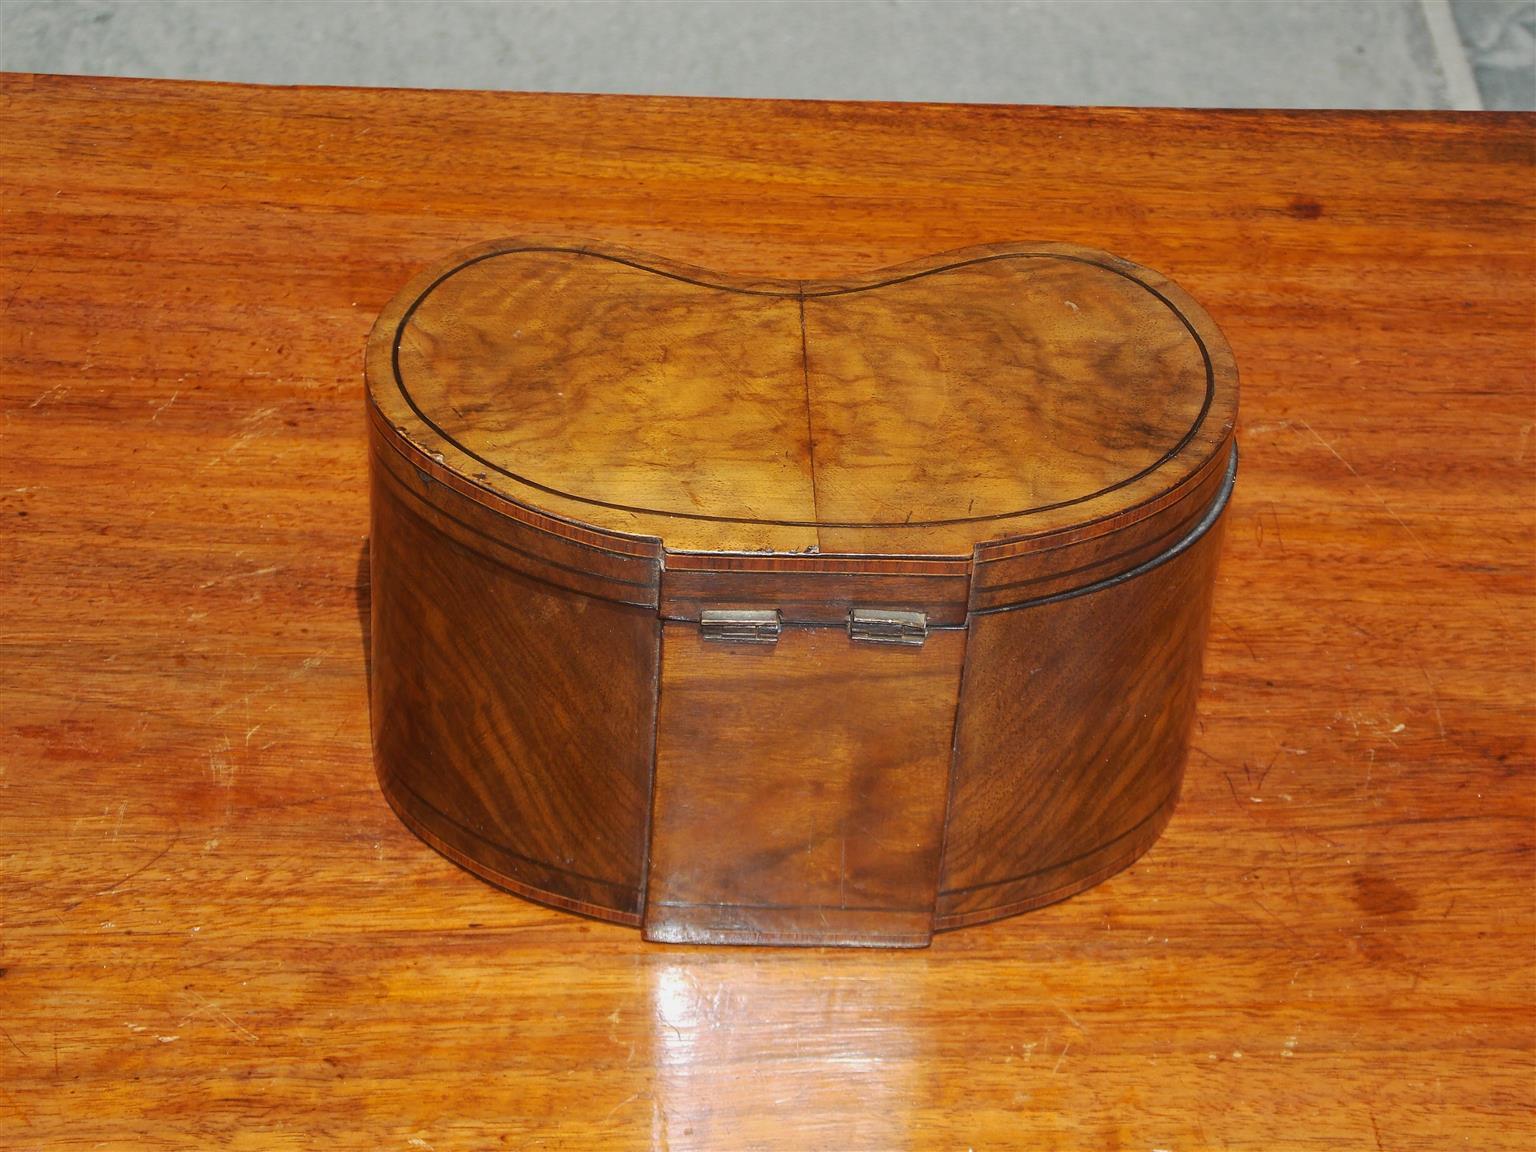 Early 19th Century English Burl Walnut Ebony and Tulip Wood Inlaid Kidney Shaped Tea Caddy, C. 1810